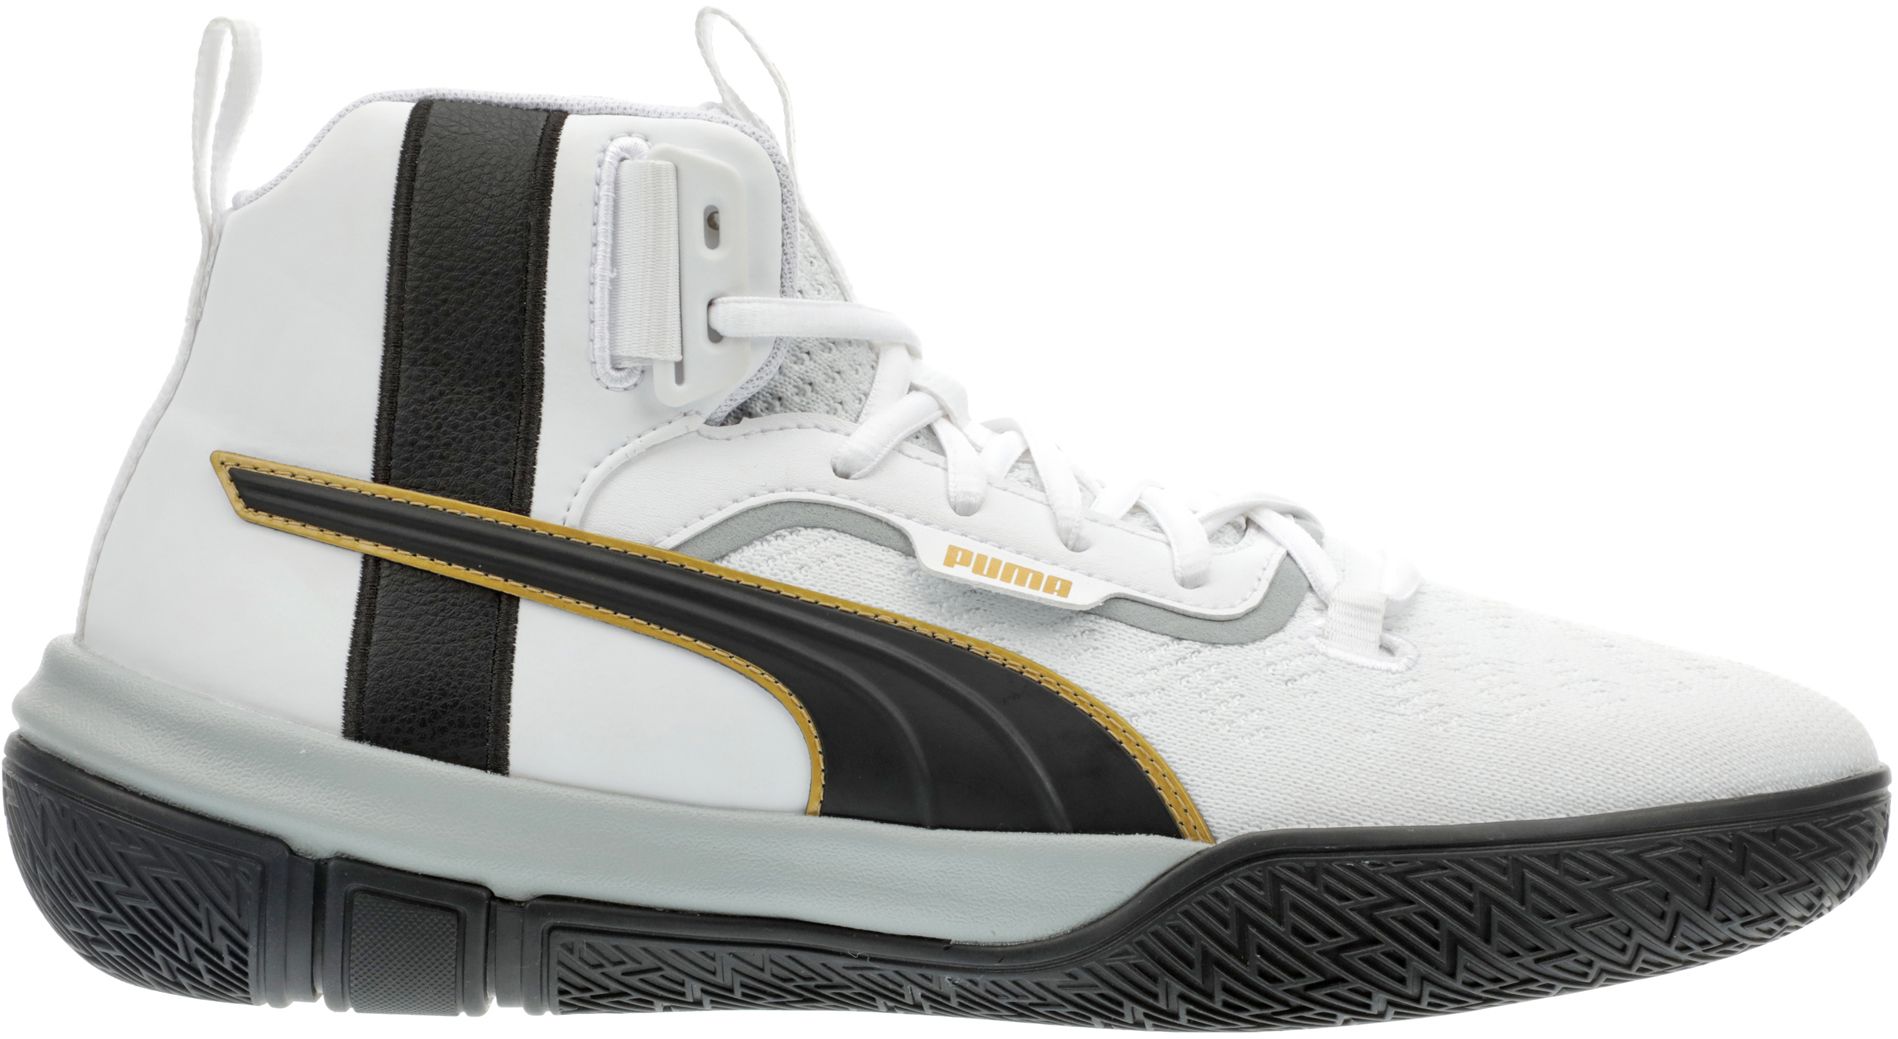 puma basketball shoes white and black